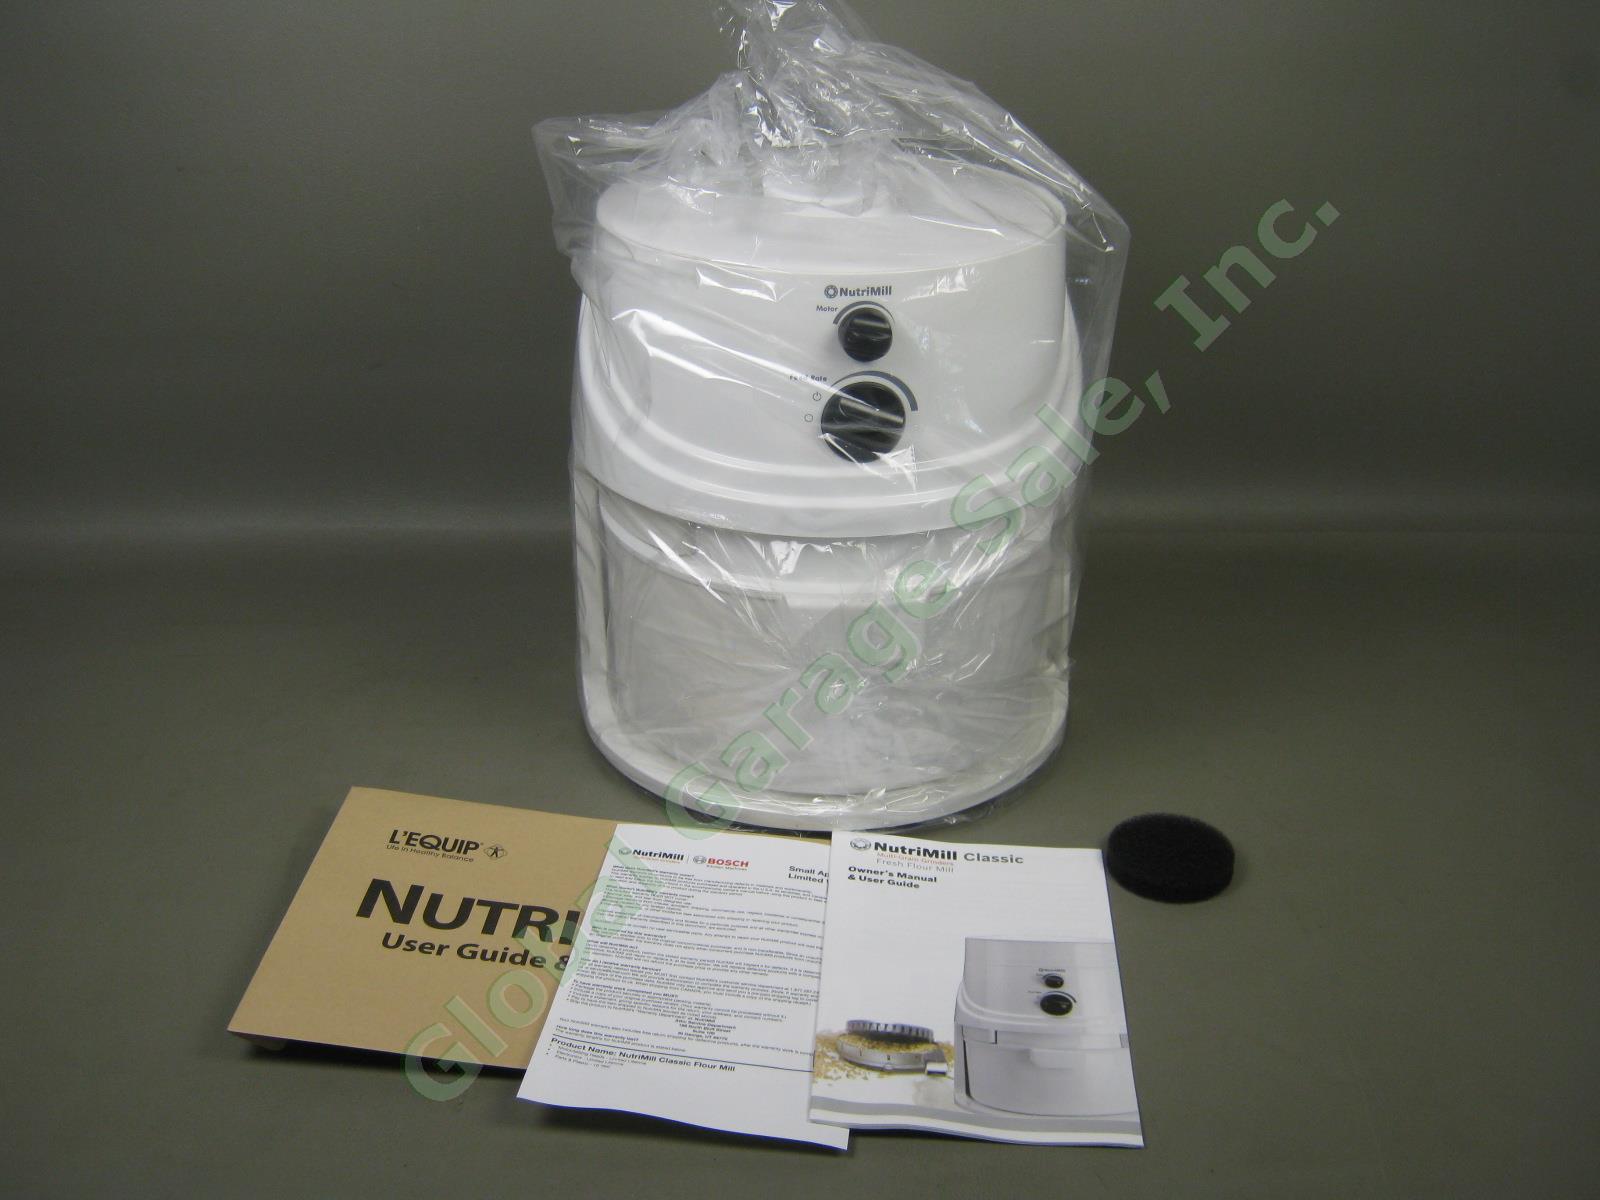 NEW NutriMill Classic 20-Cup Multi-Grain Fresh Flour Mill Grinder W/ Box HS4.3 2